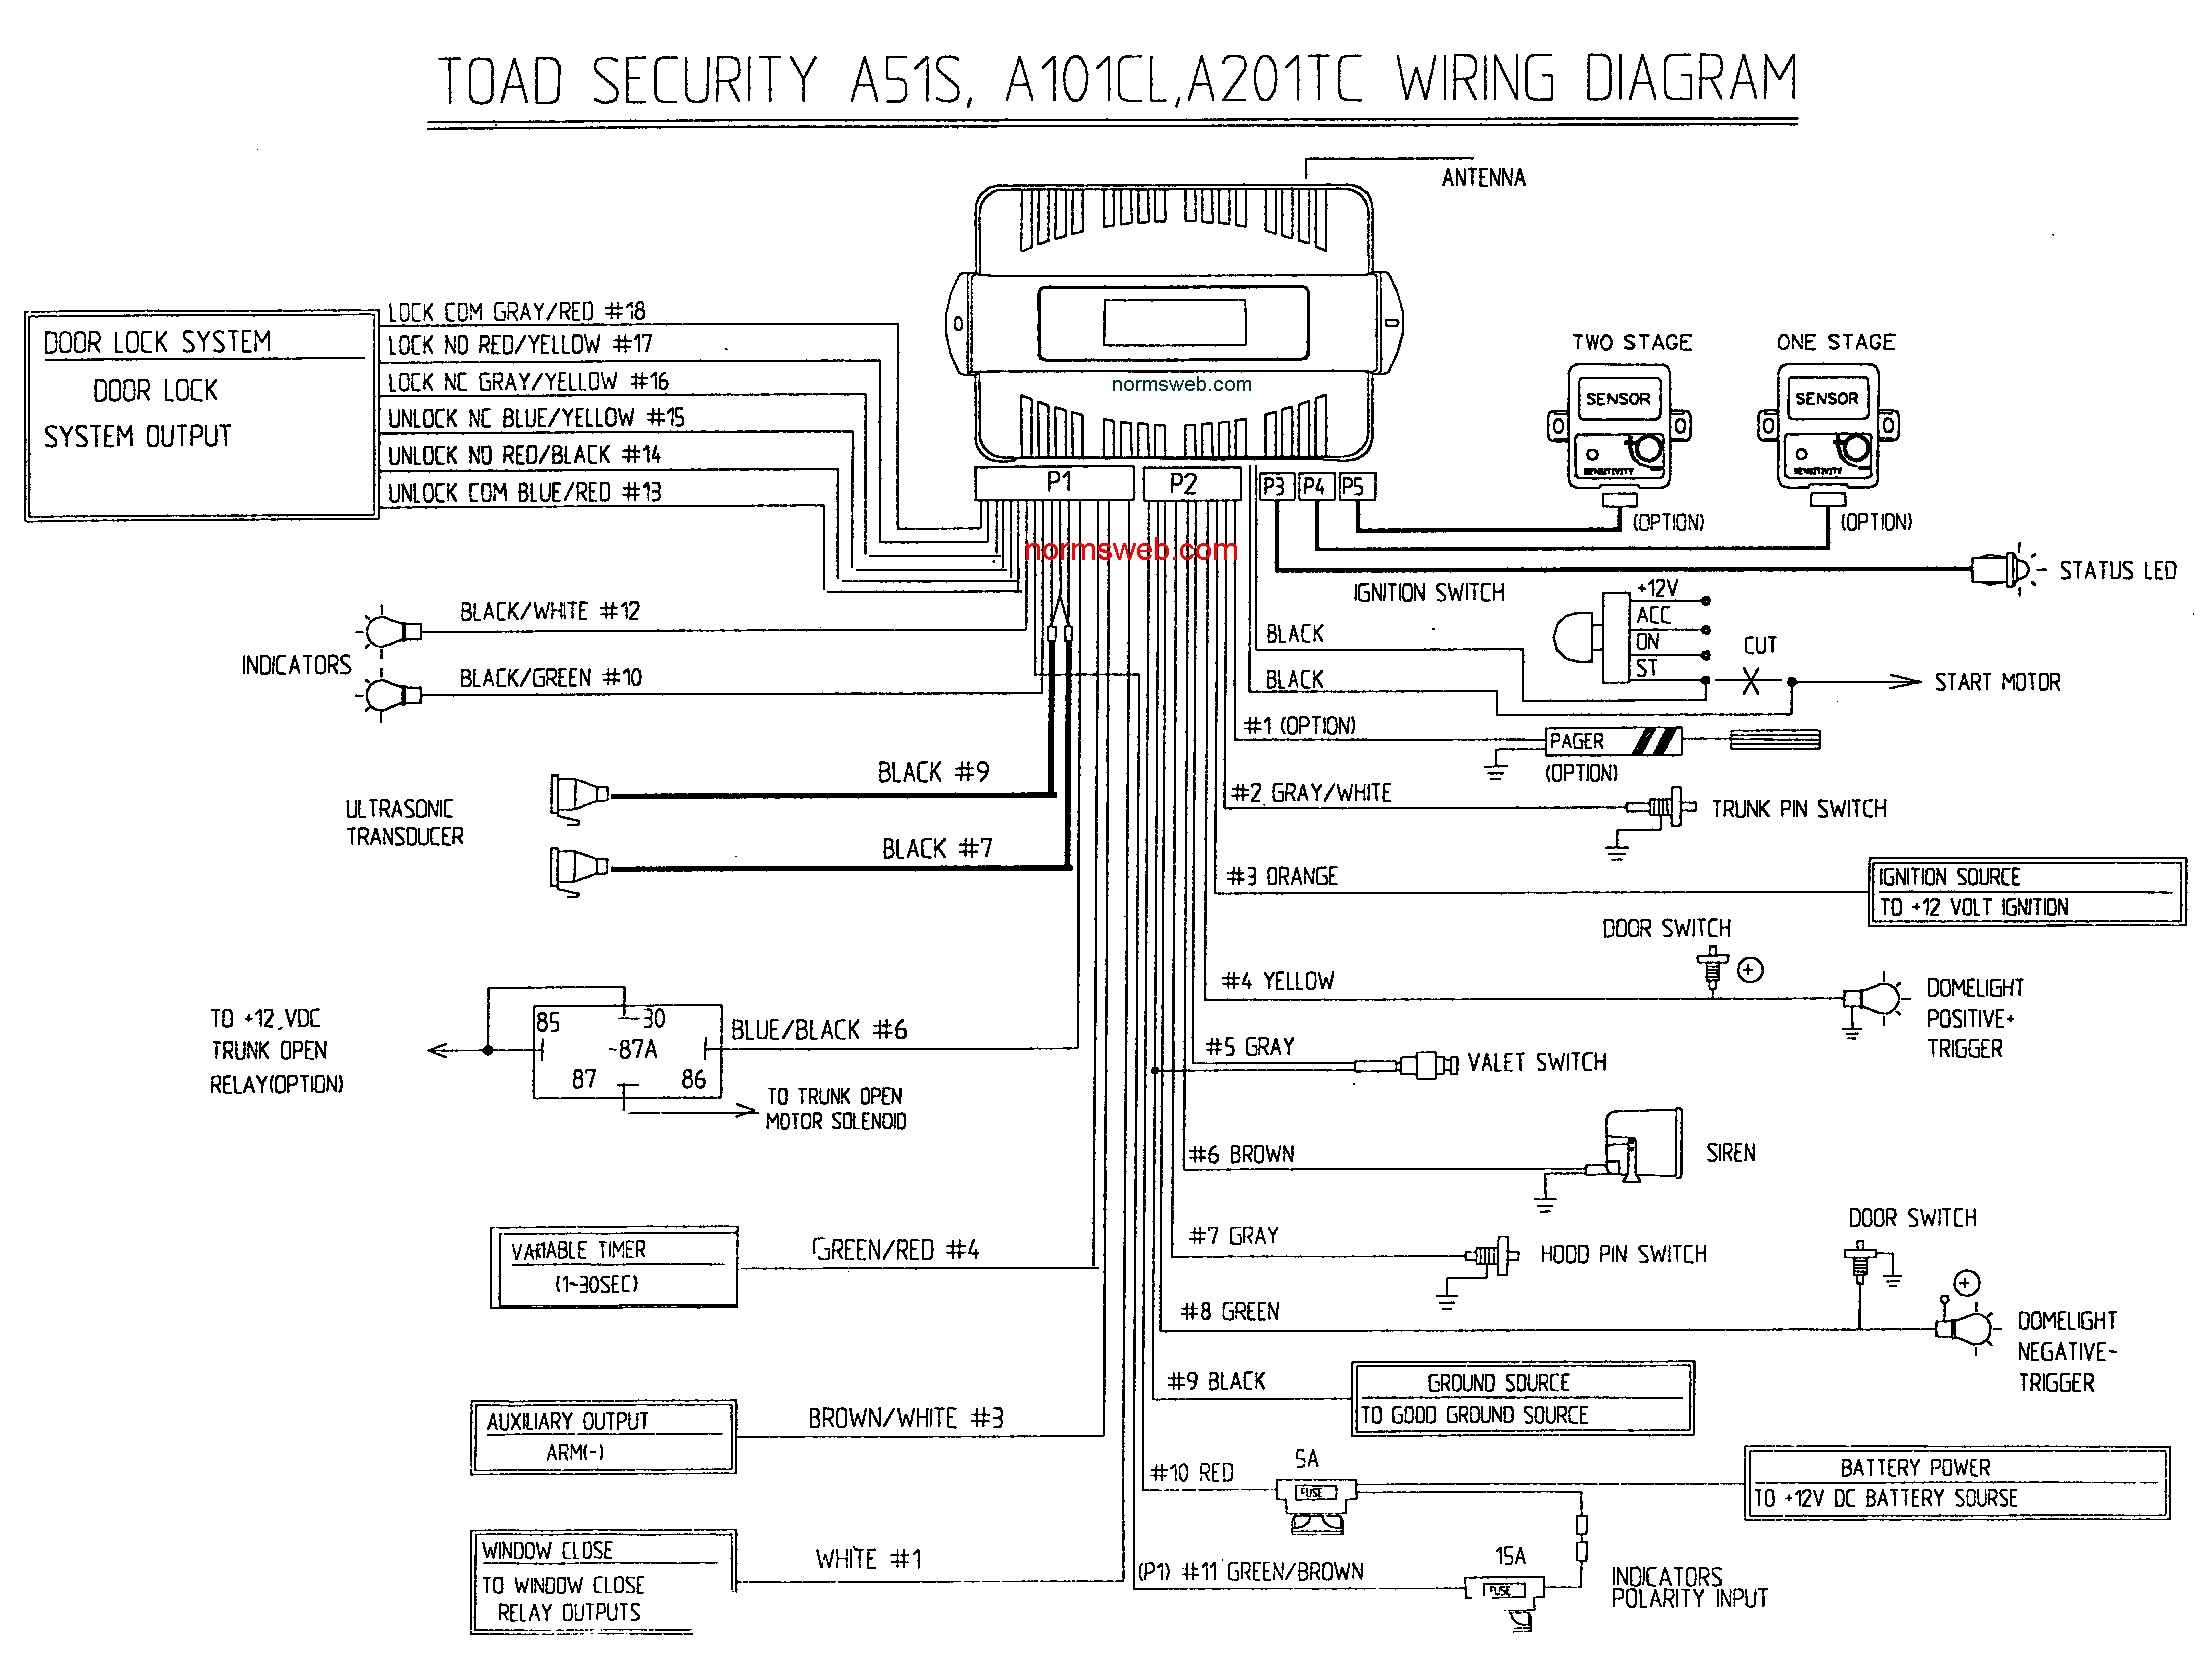 Viper Car Alarm Wiring Diagram Car Security System Wiring Diagram Copy Audiovox Car Alarm Wiring Of Viper Car Alarm Wiring Diagram